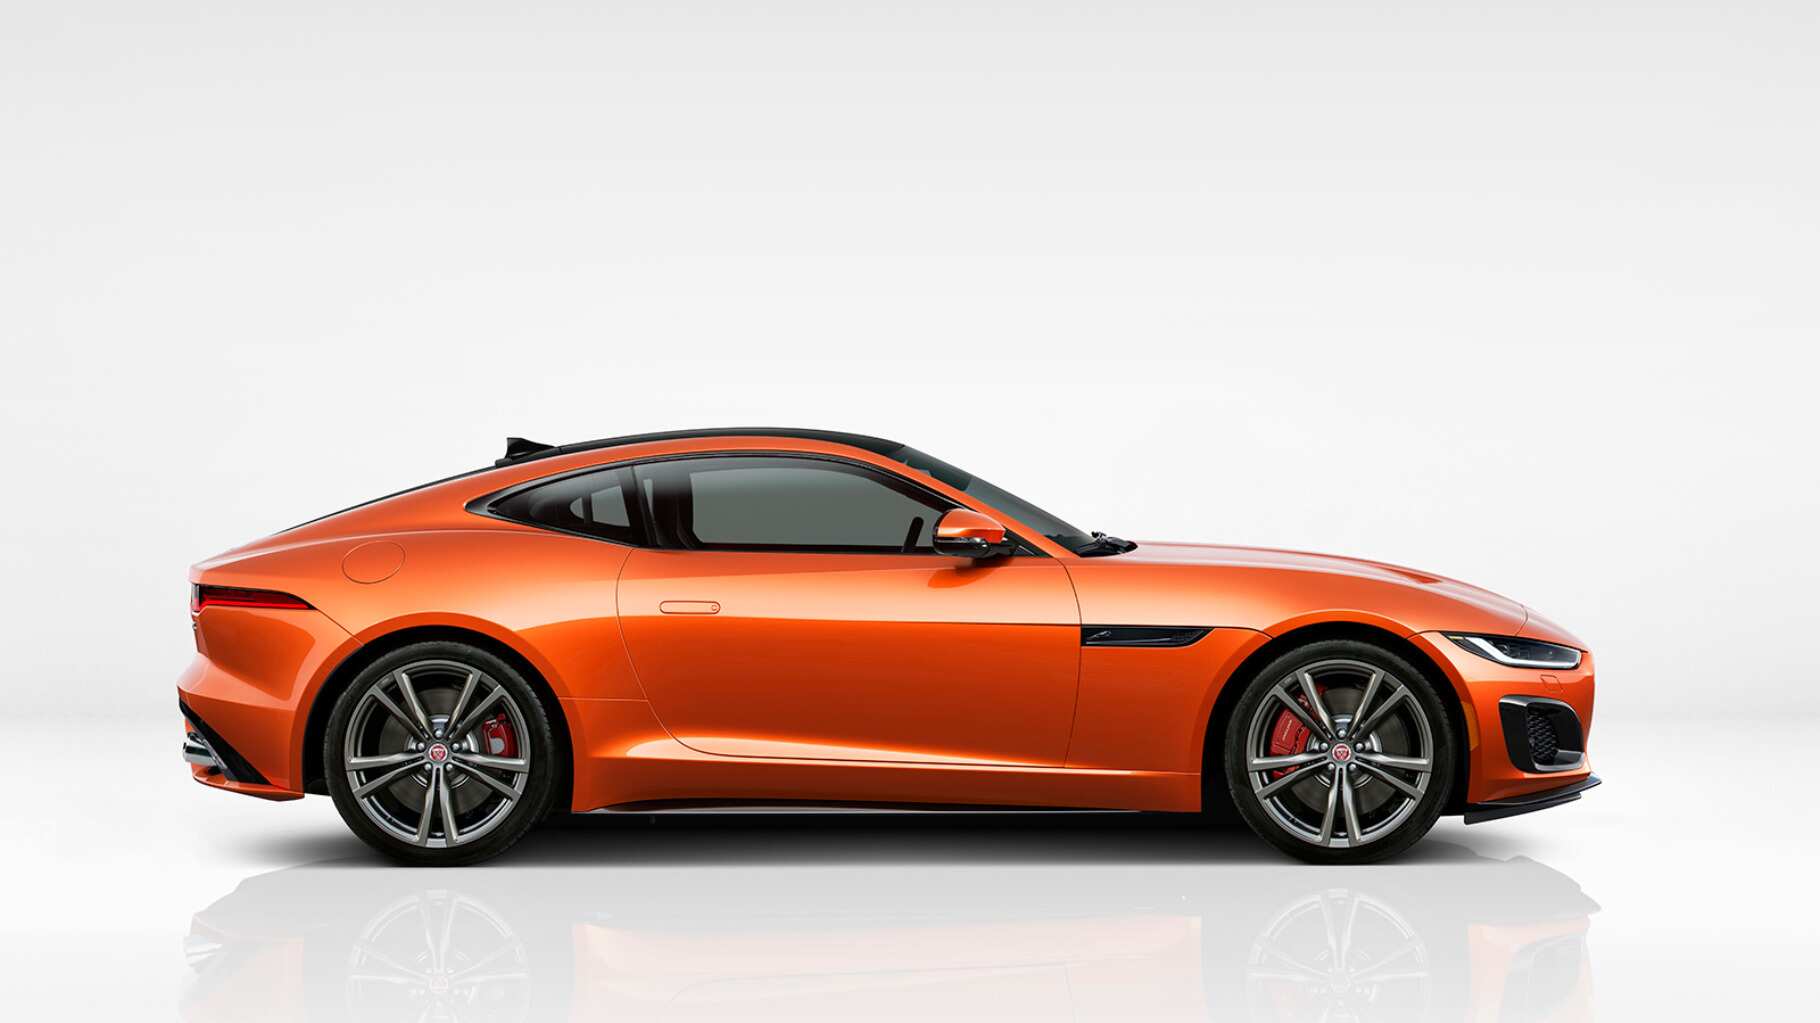 New Jaguar F-TYPE Side Profile.